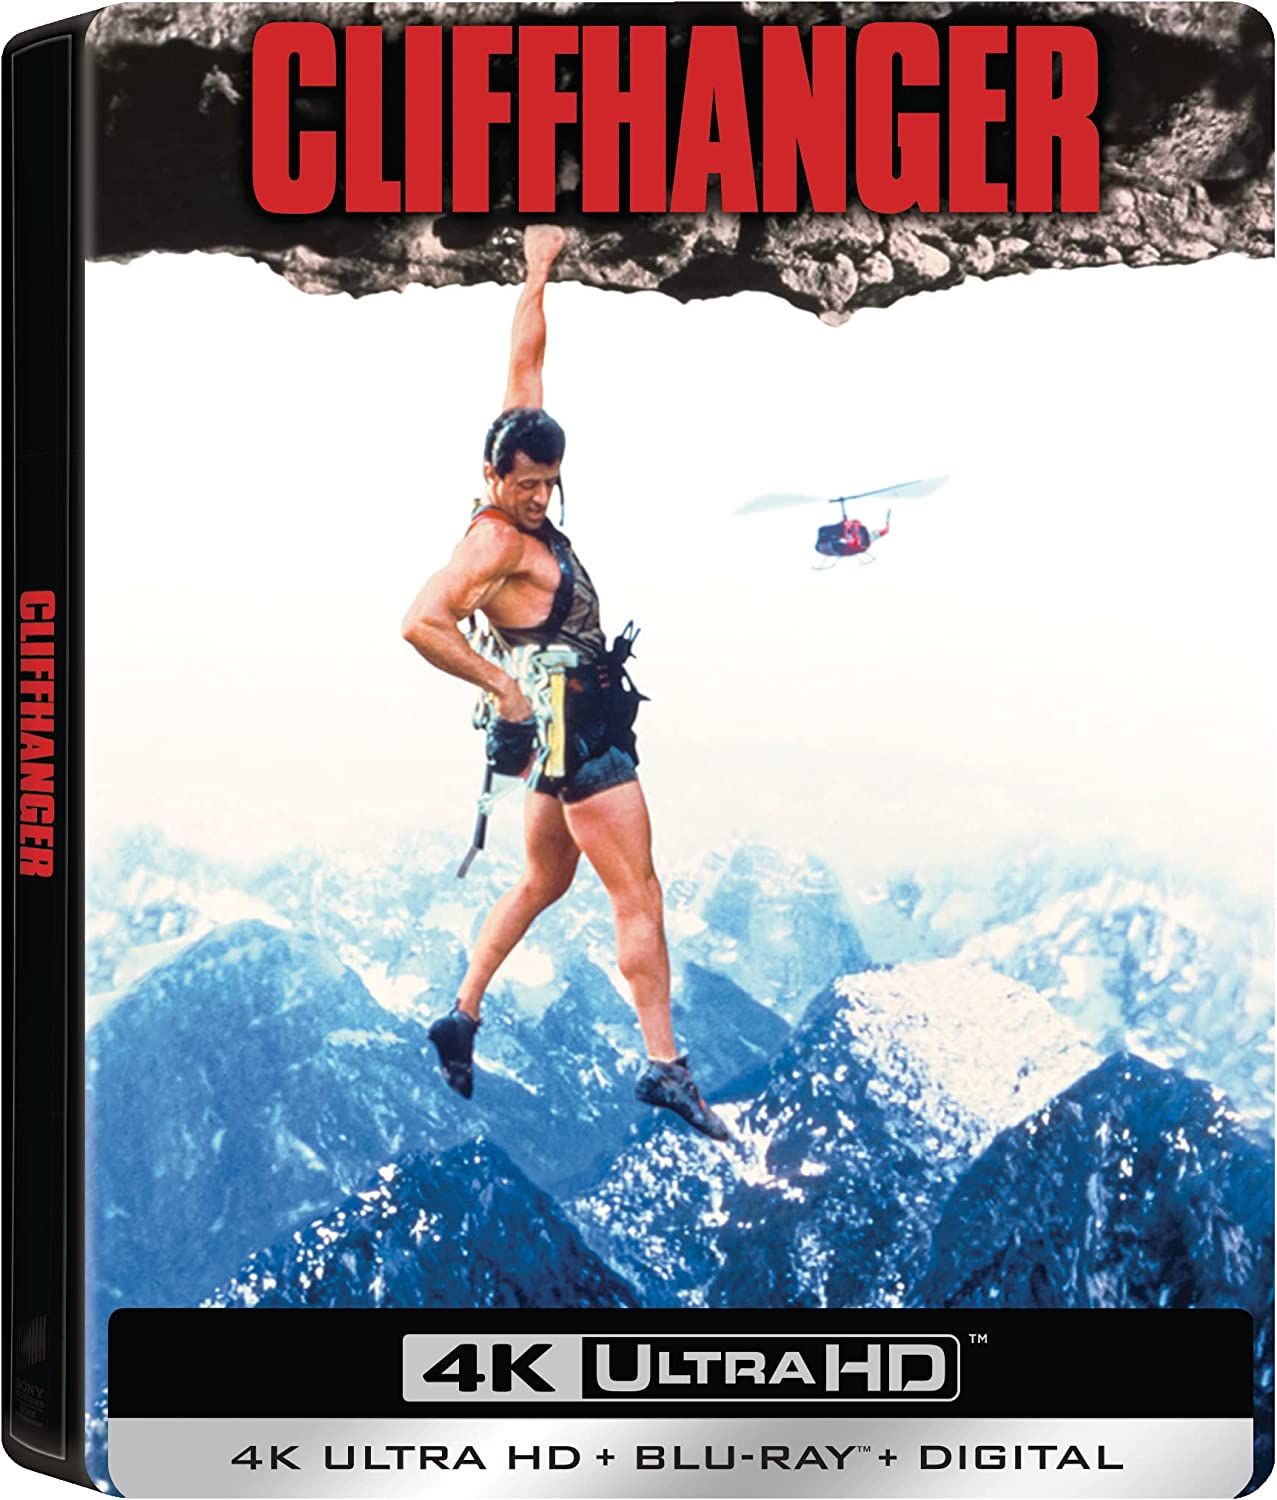 Cliffhanger 4K SB front.jpg